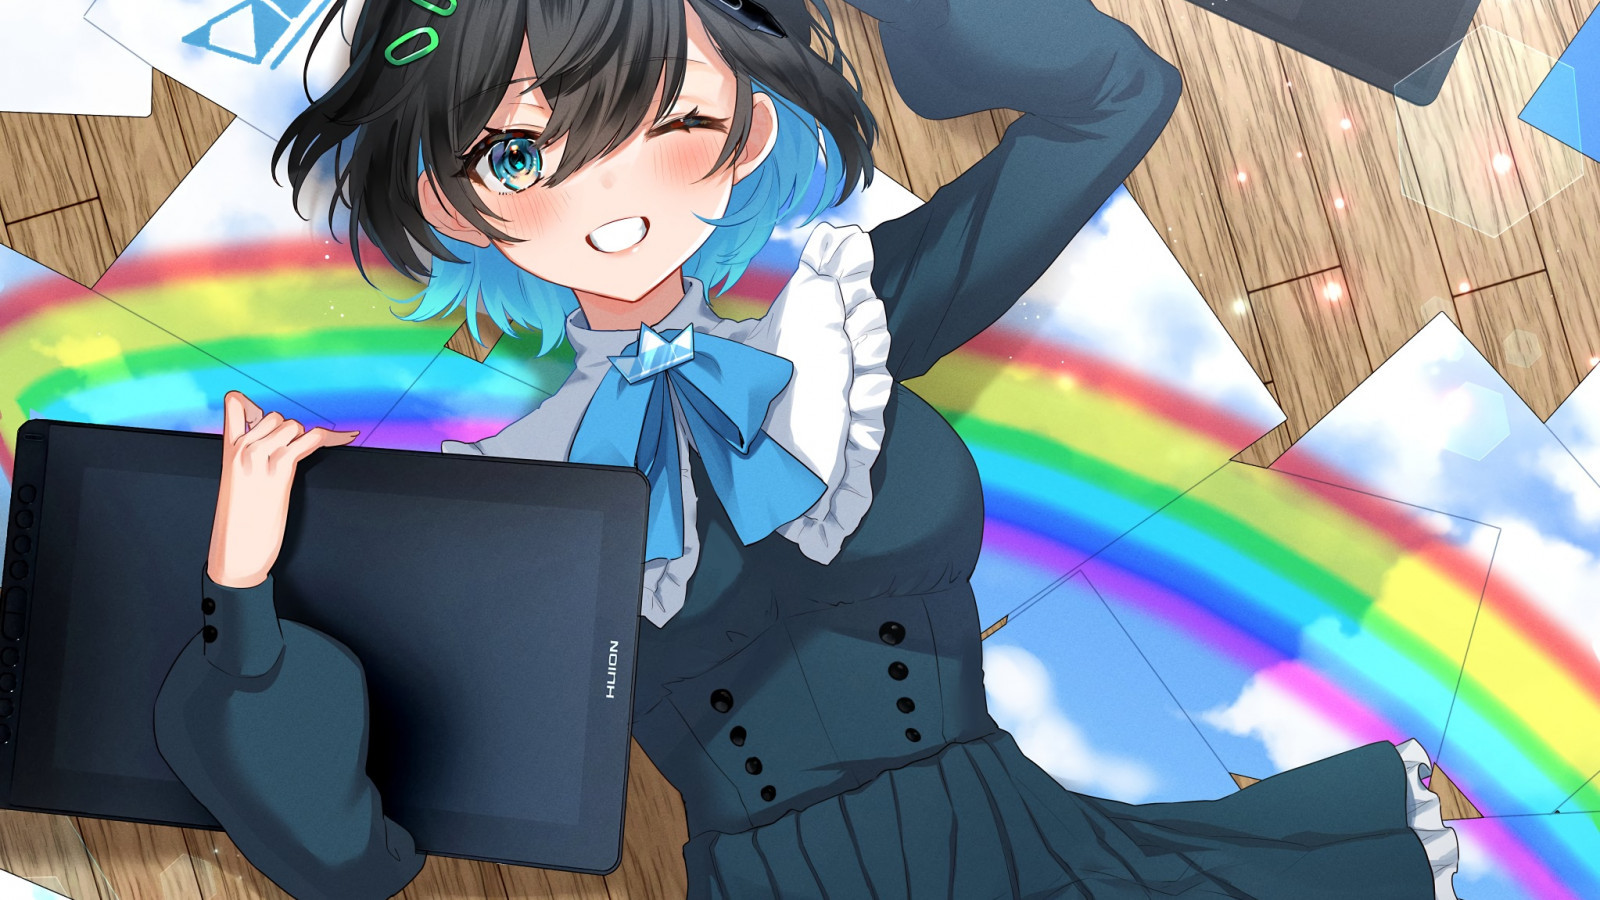 Download 1600x900 Cute Anime Girl, School Uniform, Lying Down, Wink, Rainbow Wallpaper